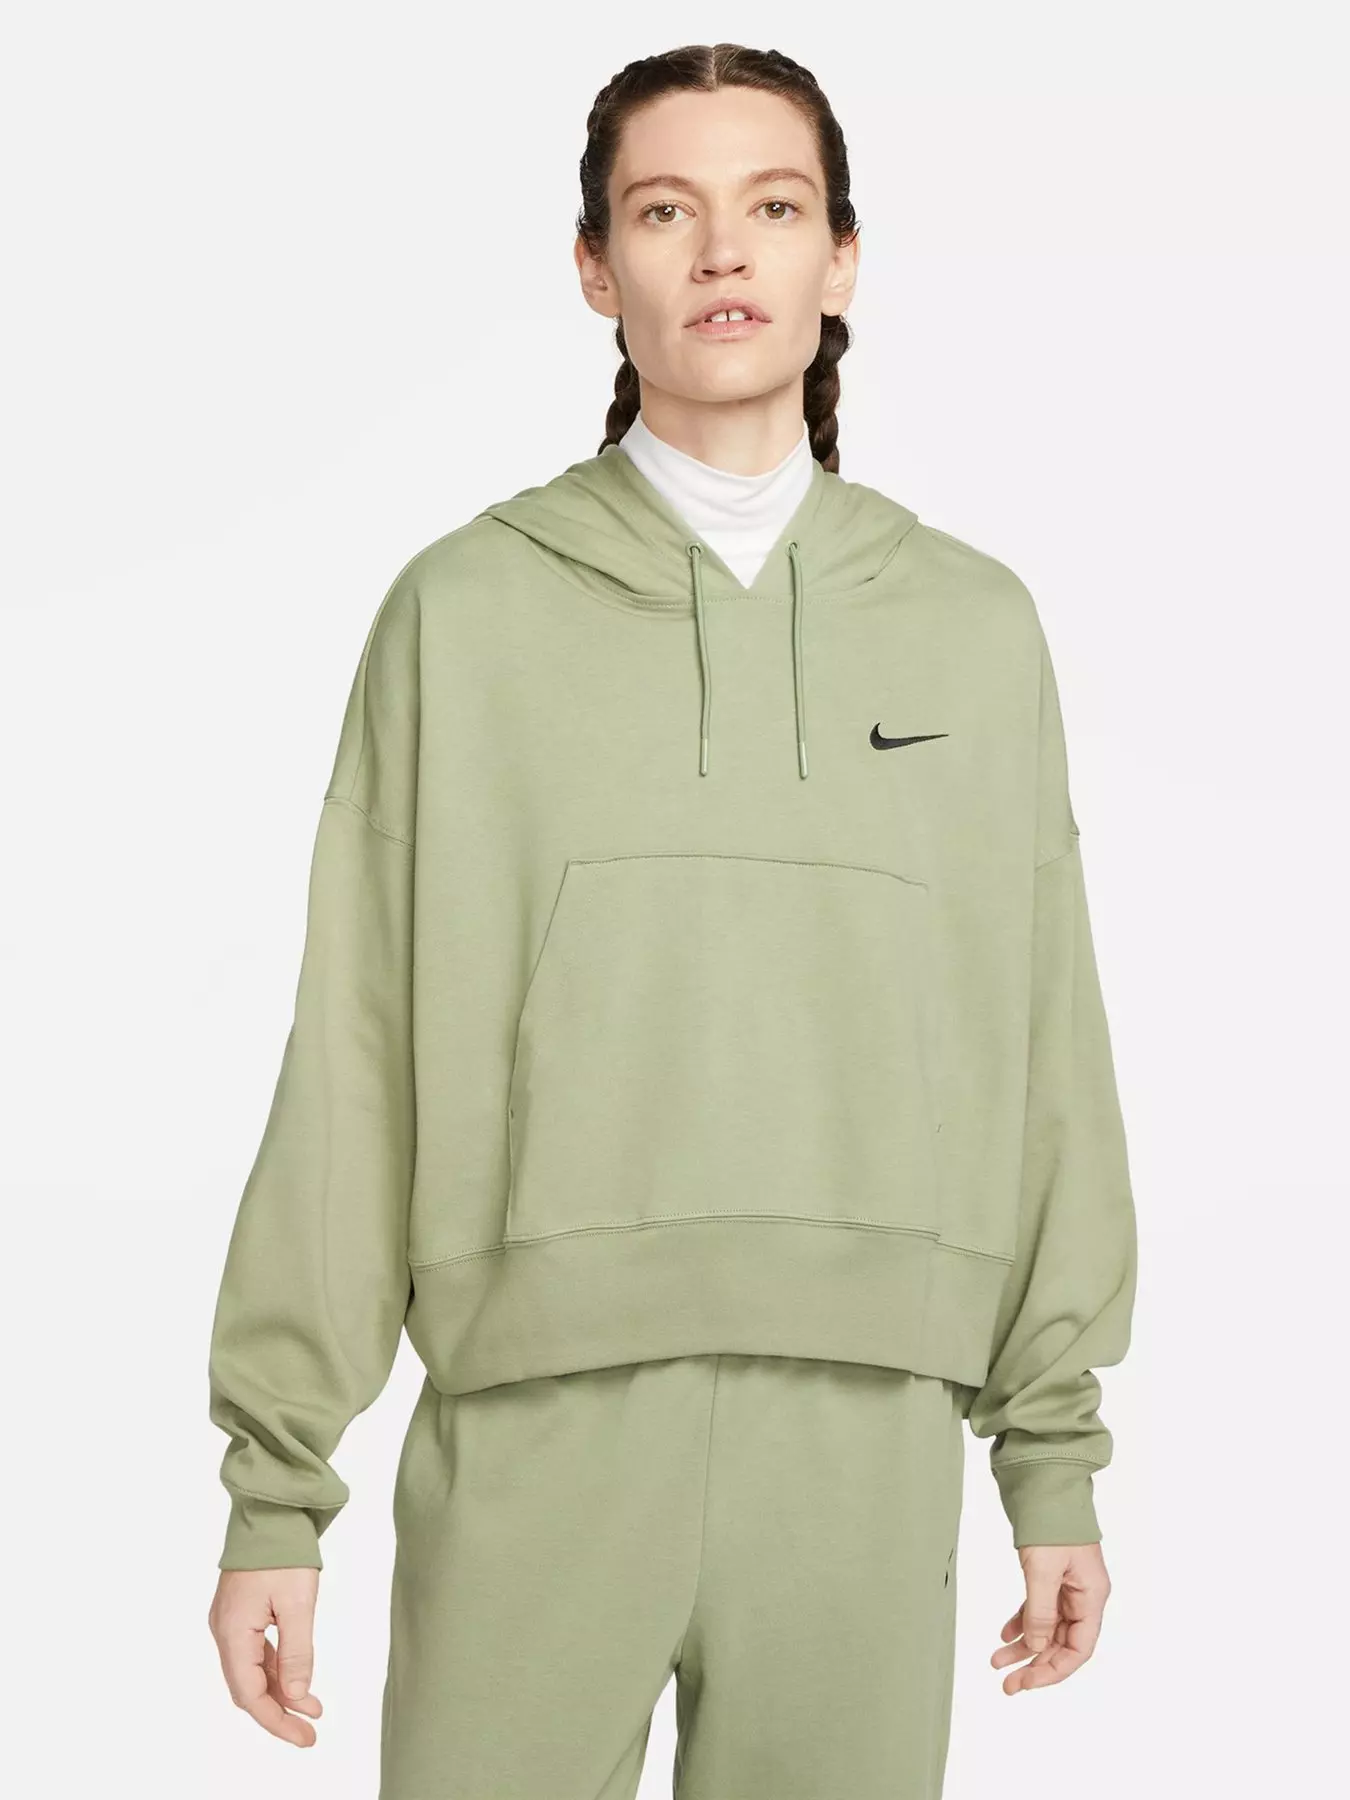 Women's Nike Hoodies, Sweatshirts & Zip Up